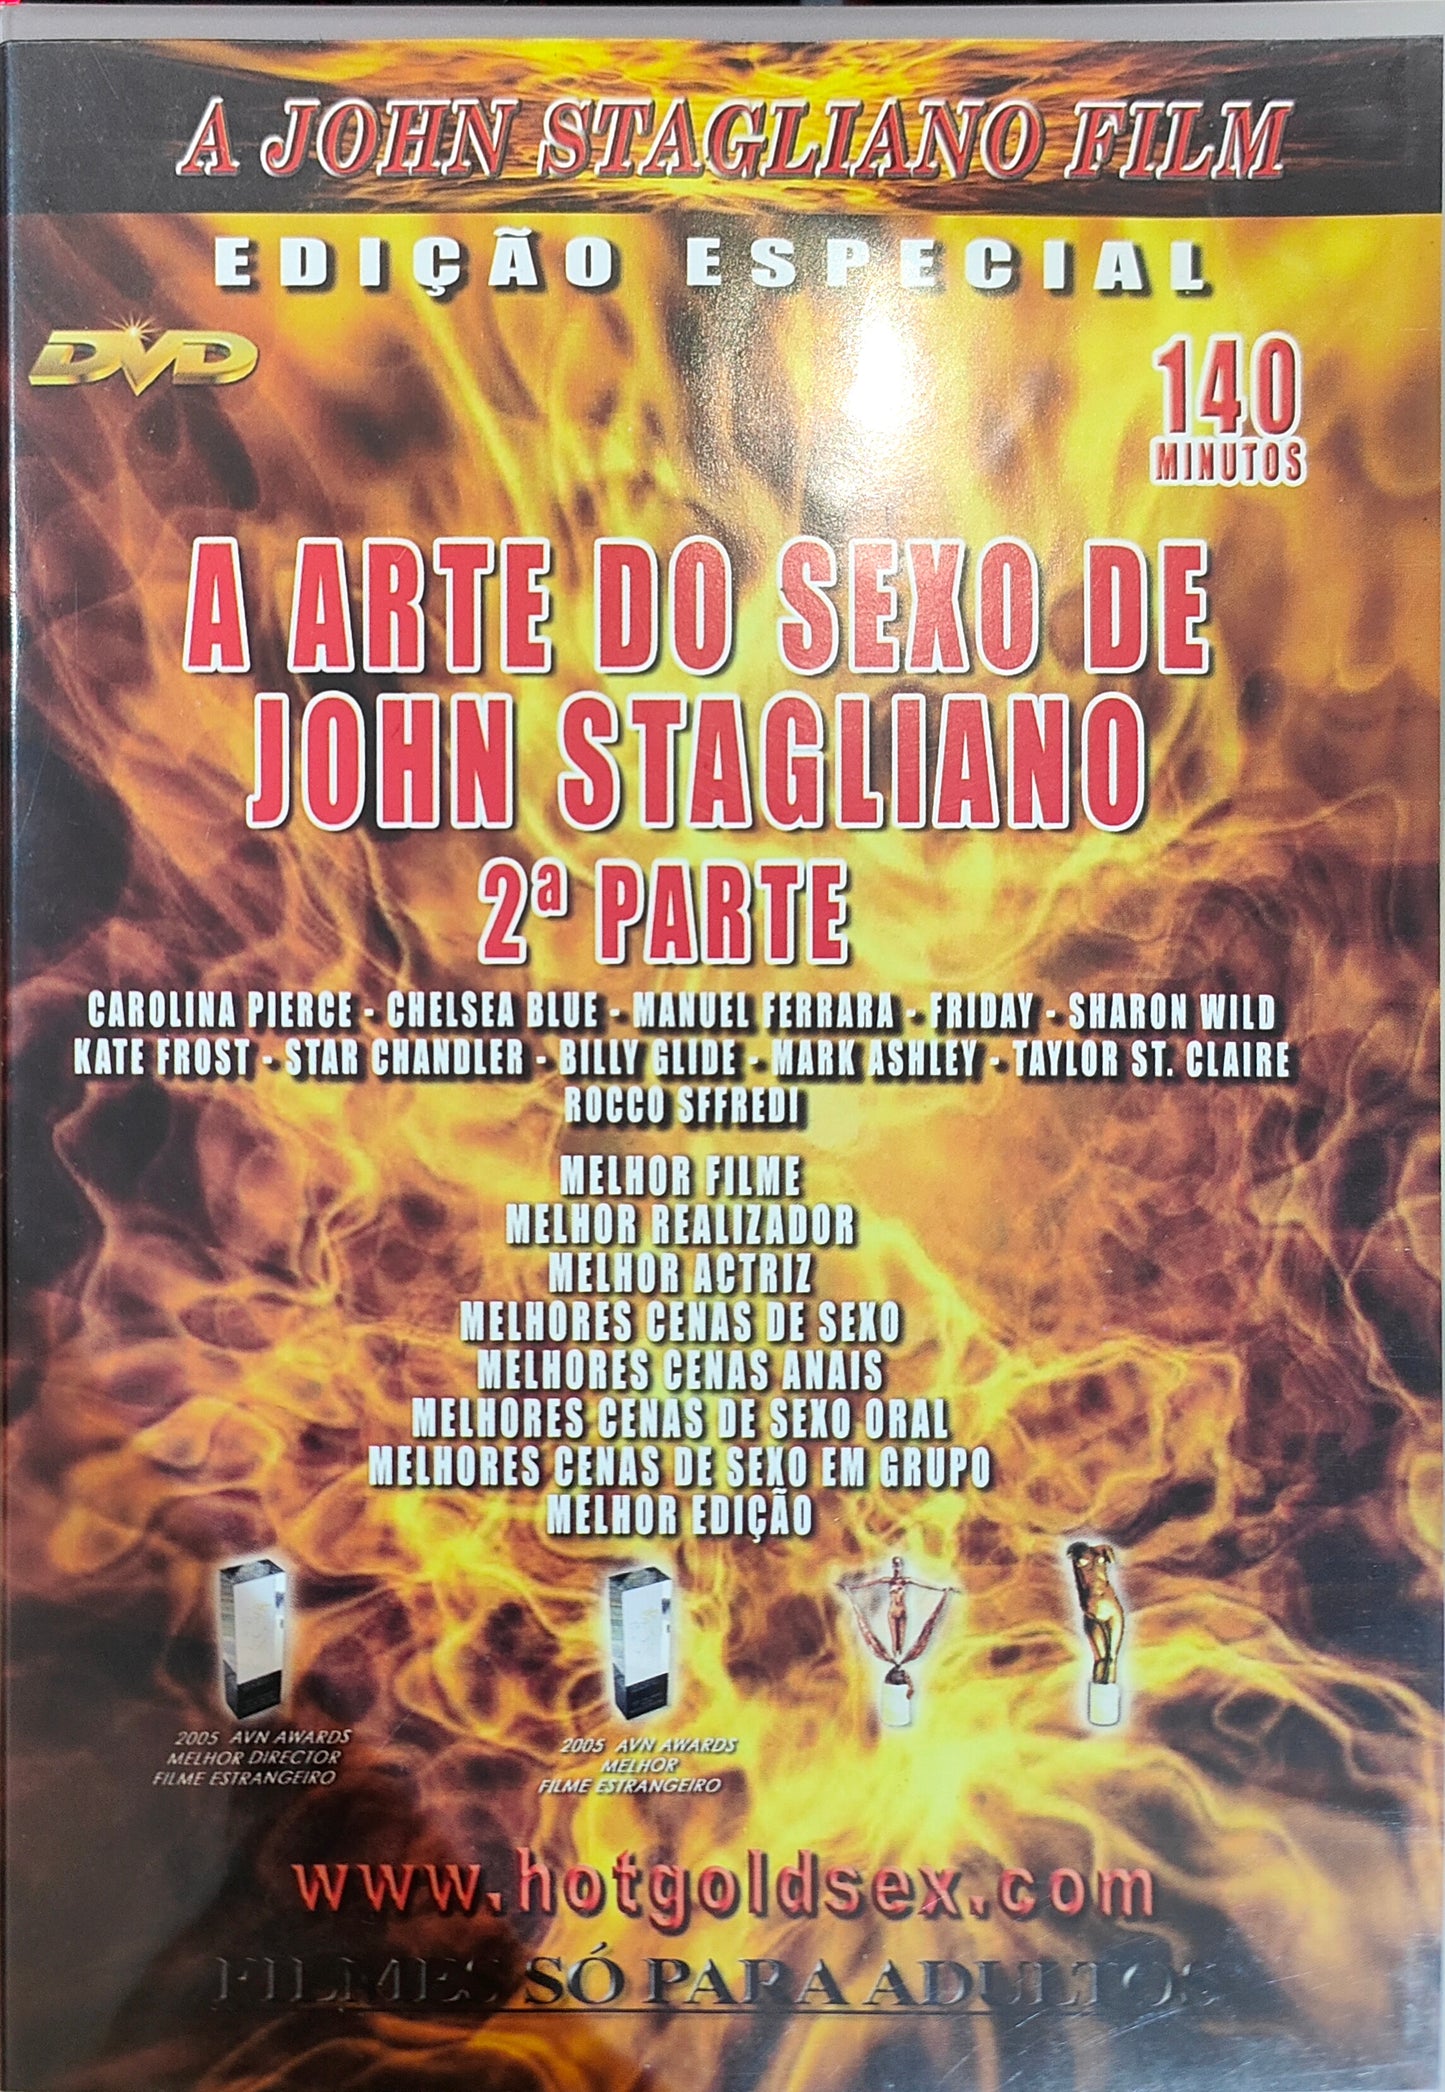 DVD +18 A ARTE DO SEXO DE JOHN STAGLIANO